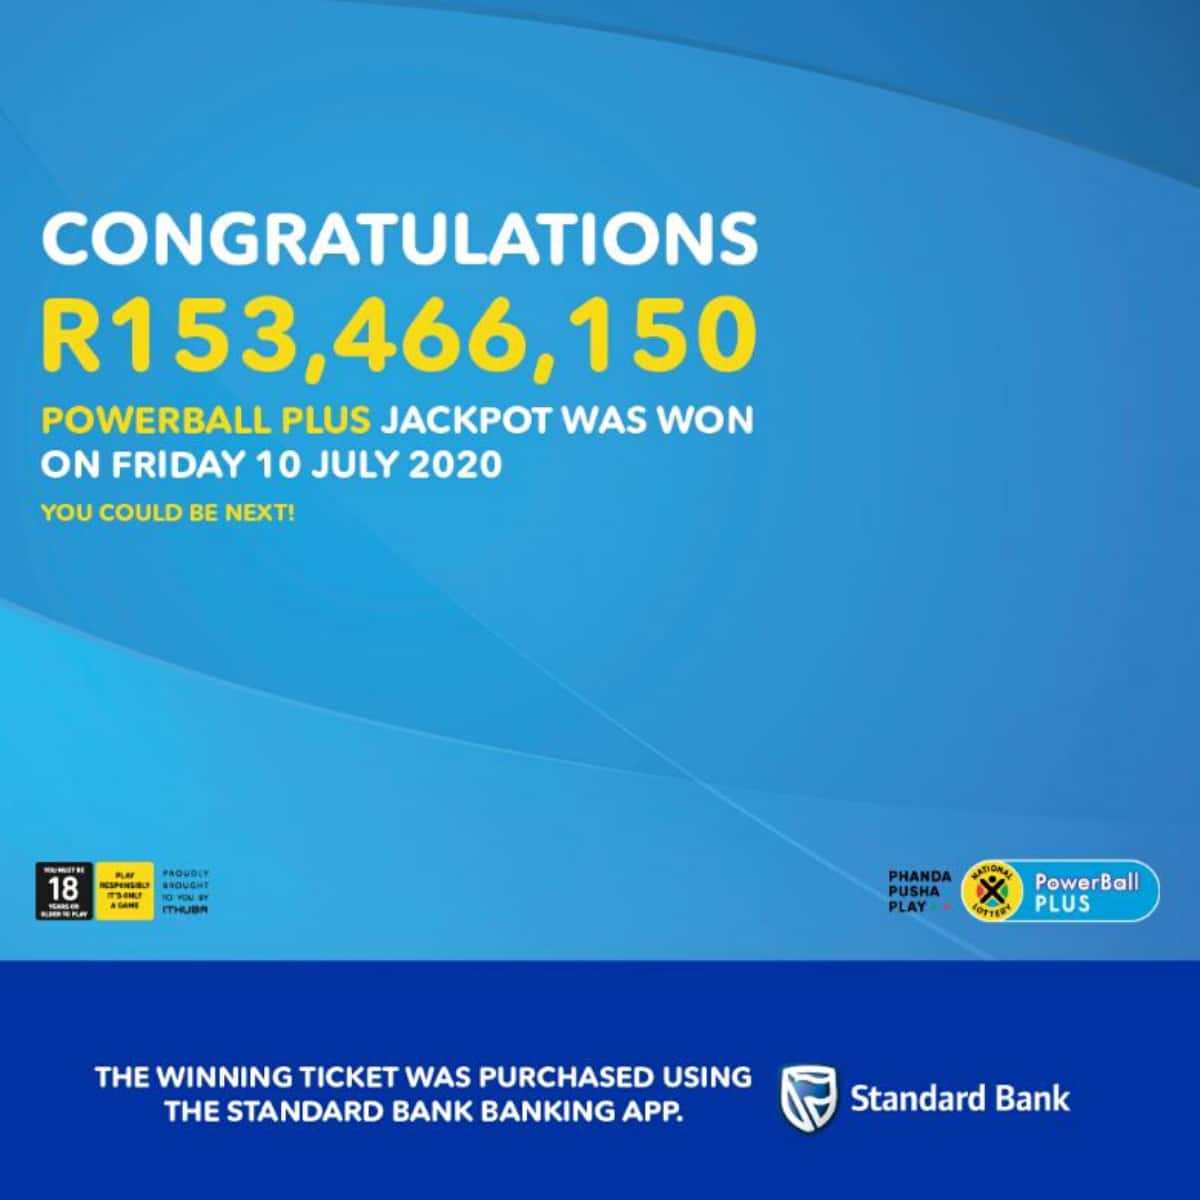 standard bank buy lotto